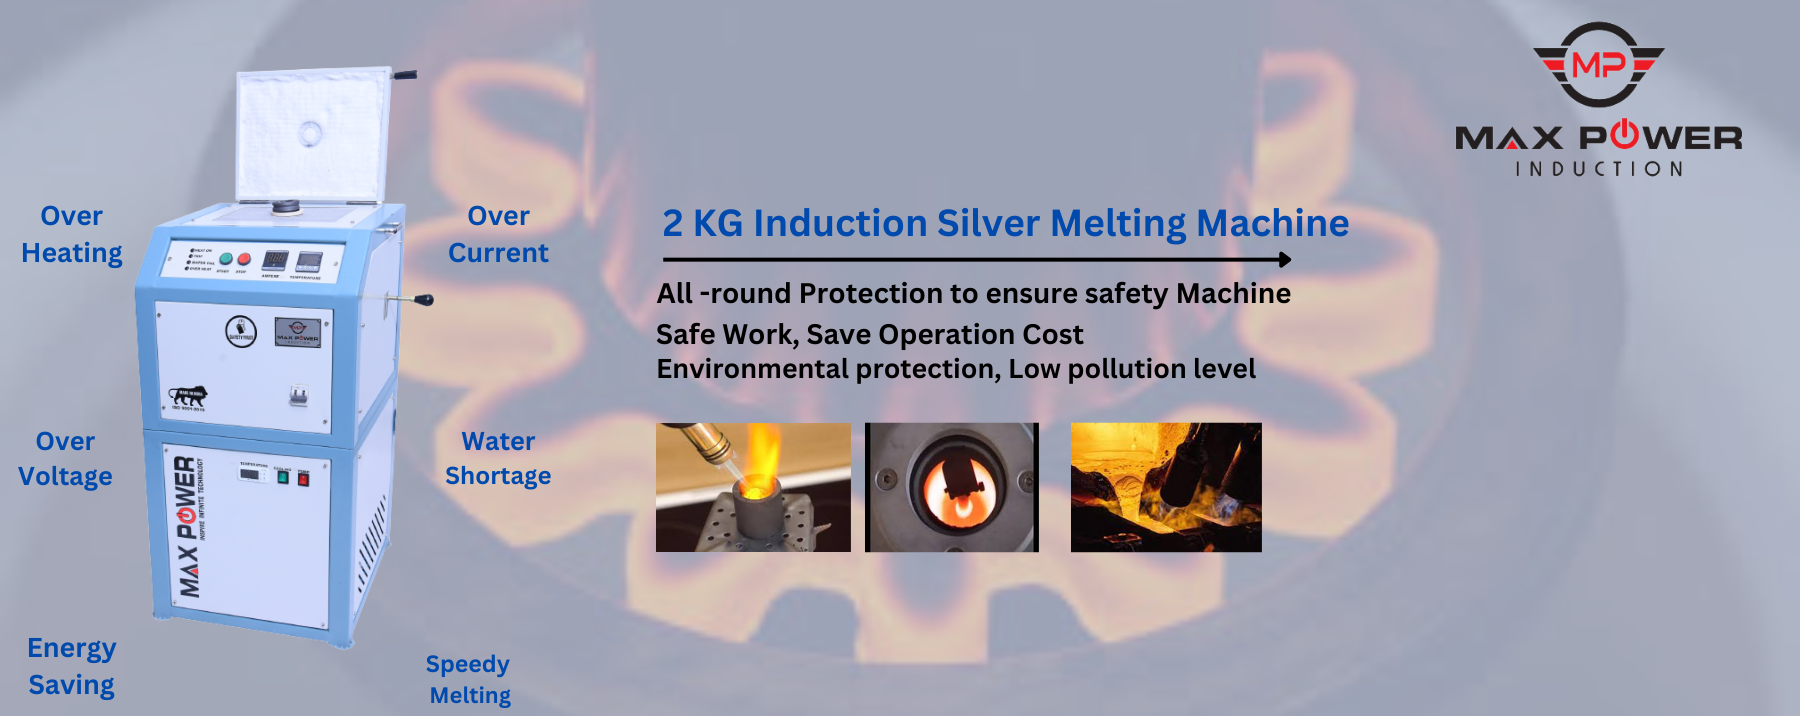 2 KG Induction Silver Melting Machine